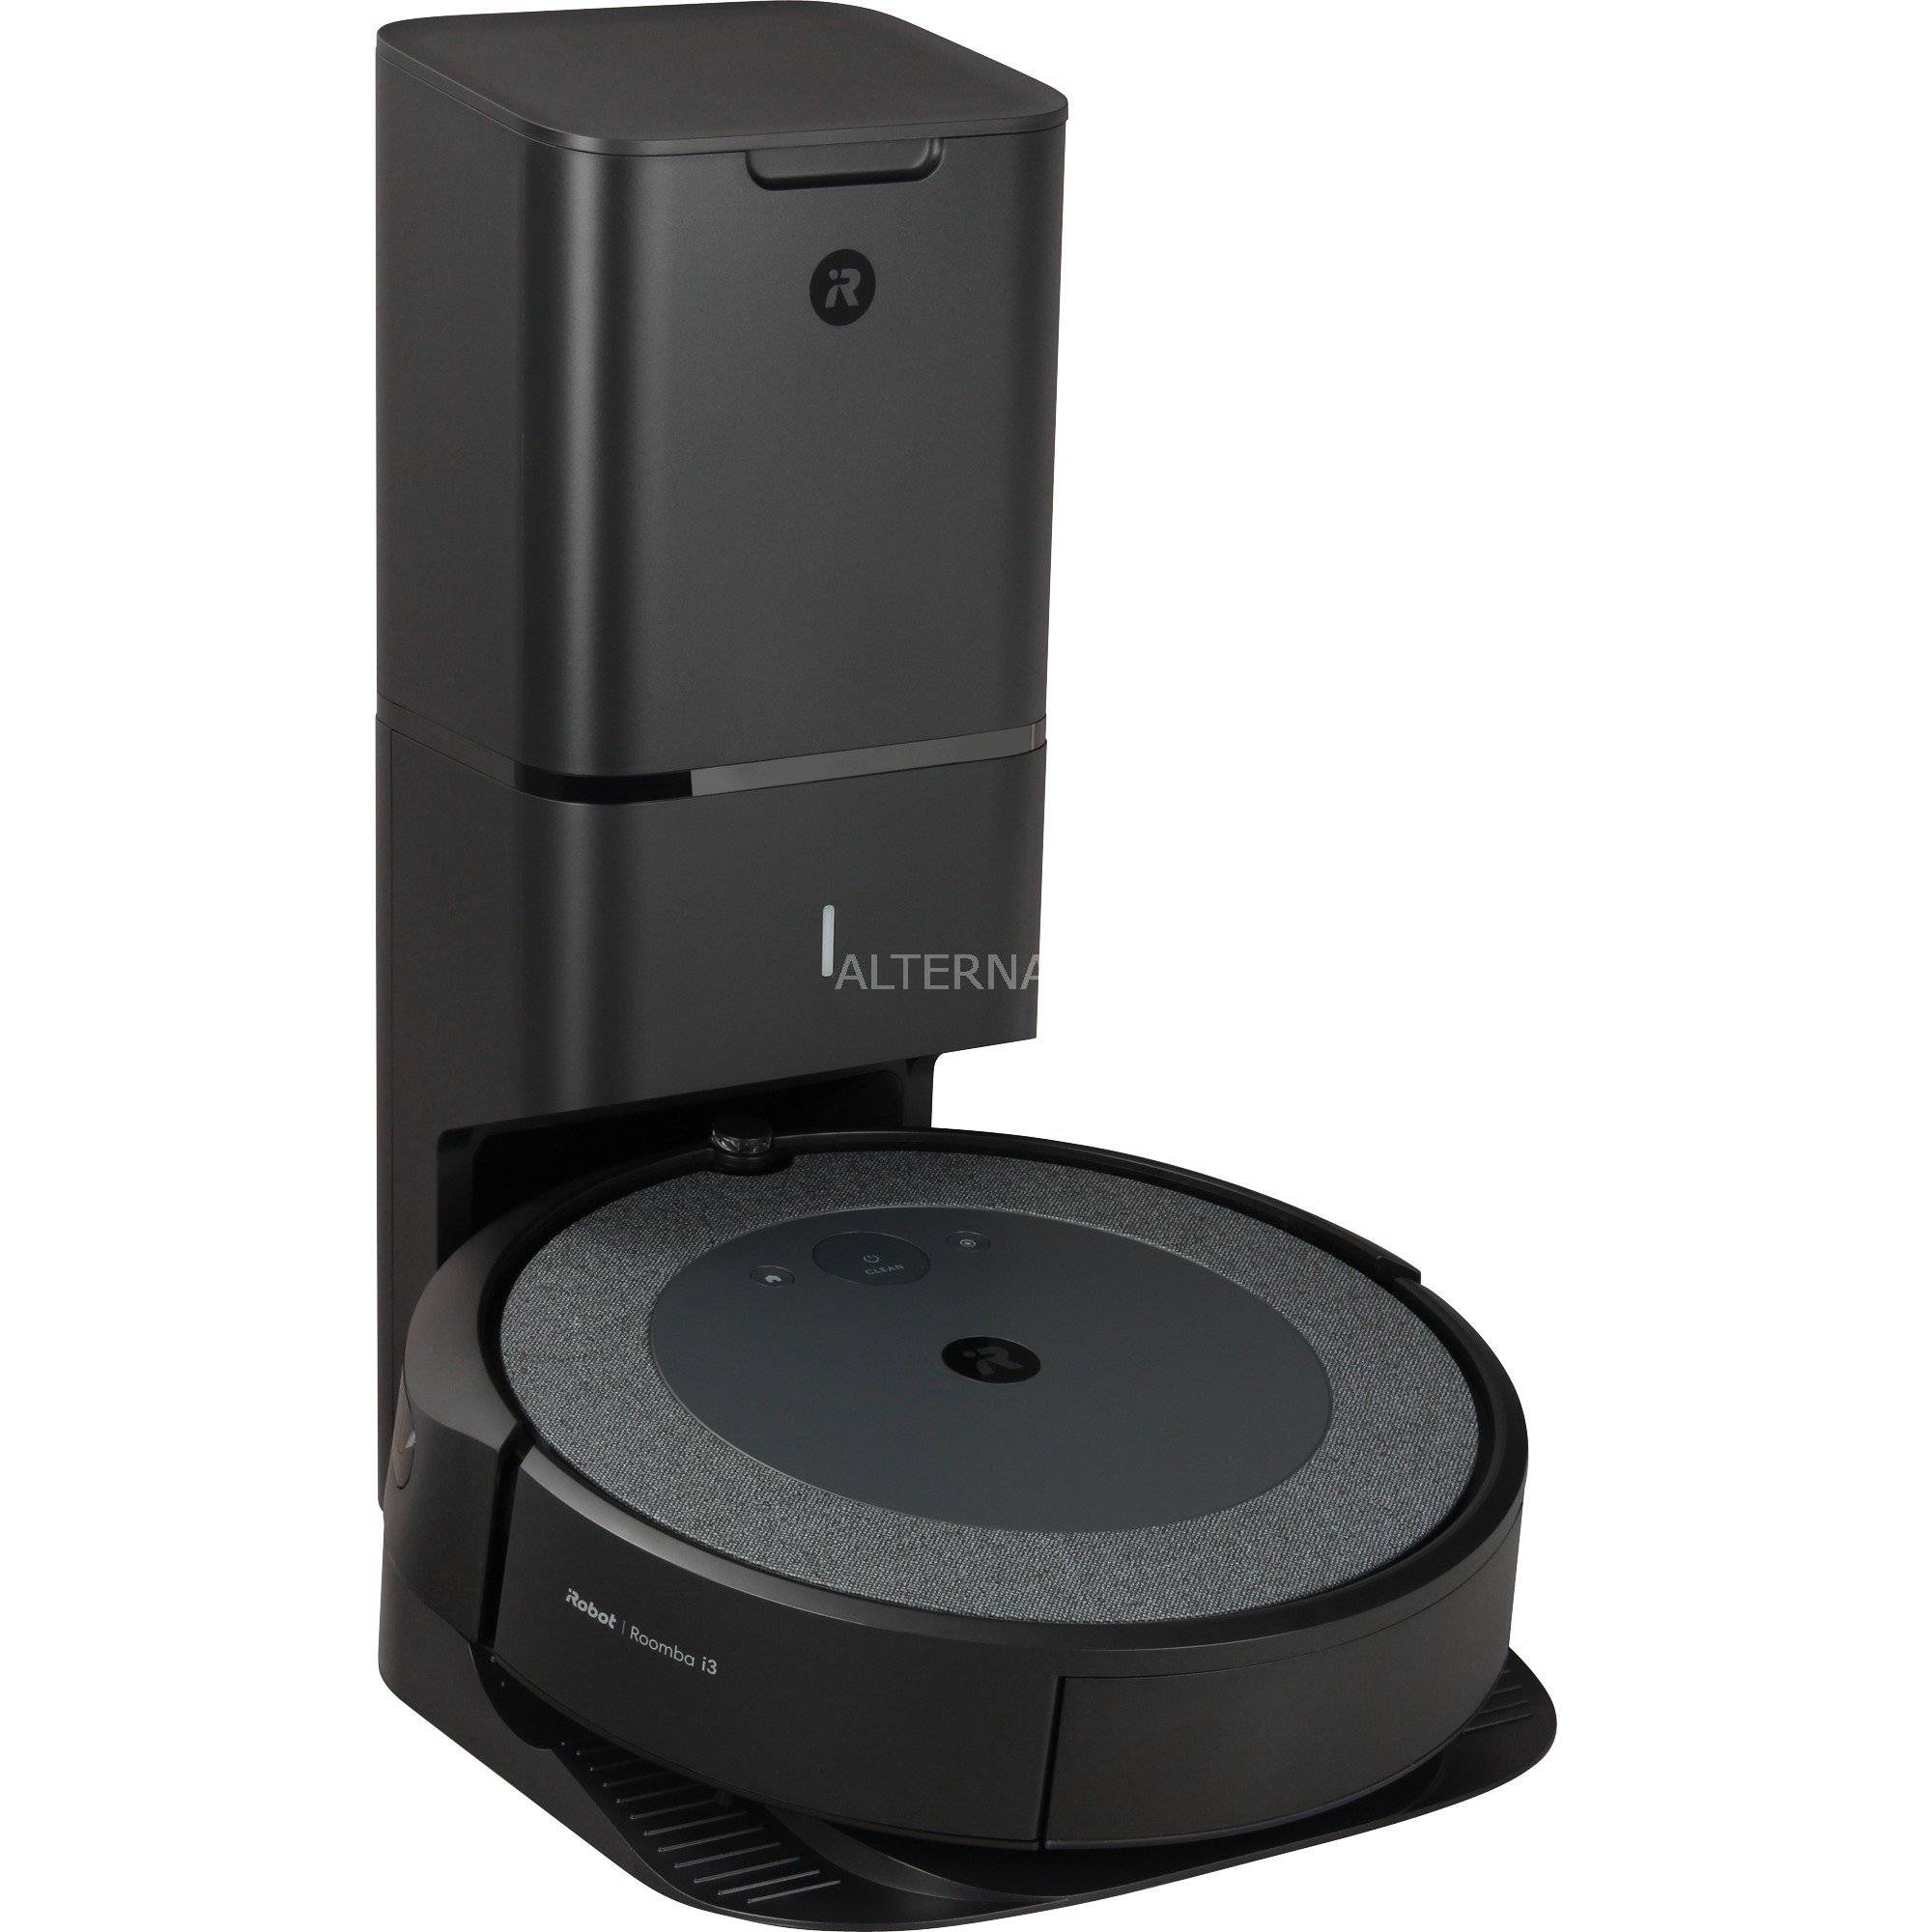 Image of Alternate - Roomba i3+ (3558), Saugroboter online einkaufen bei Alternate